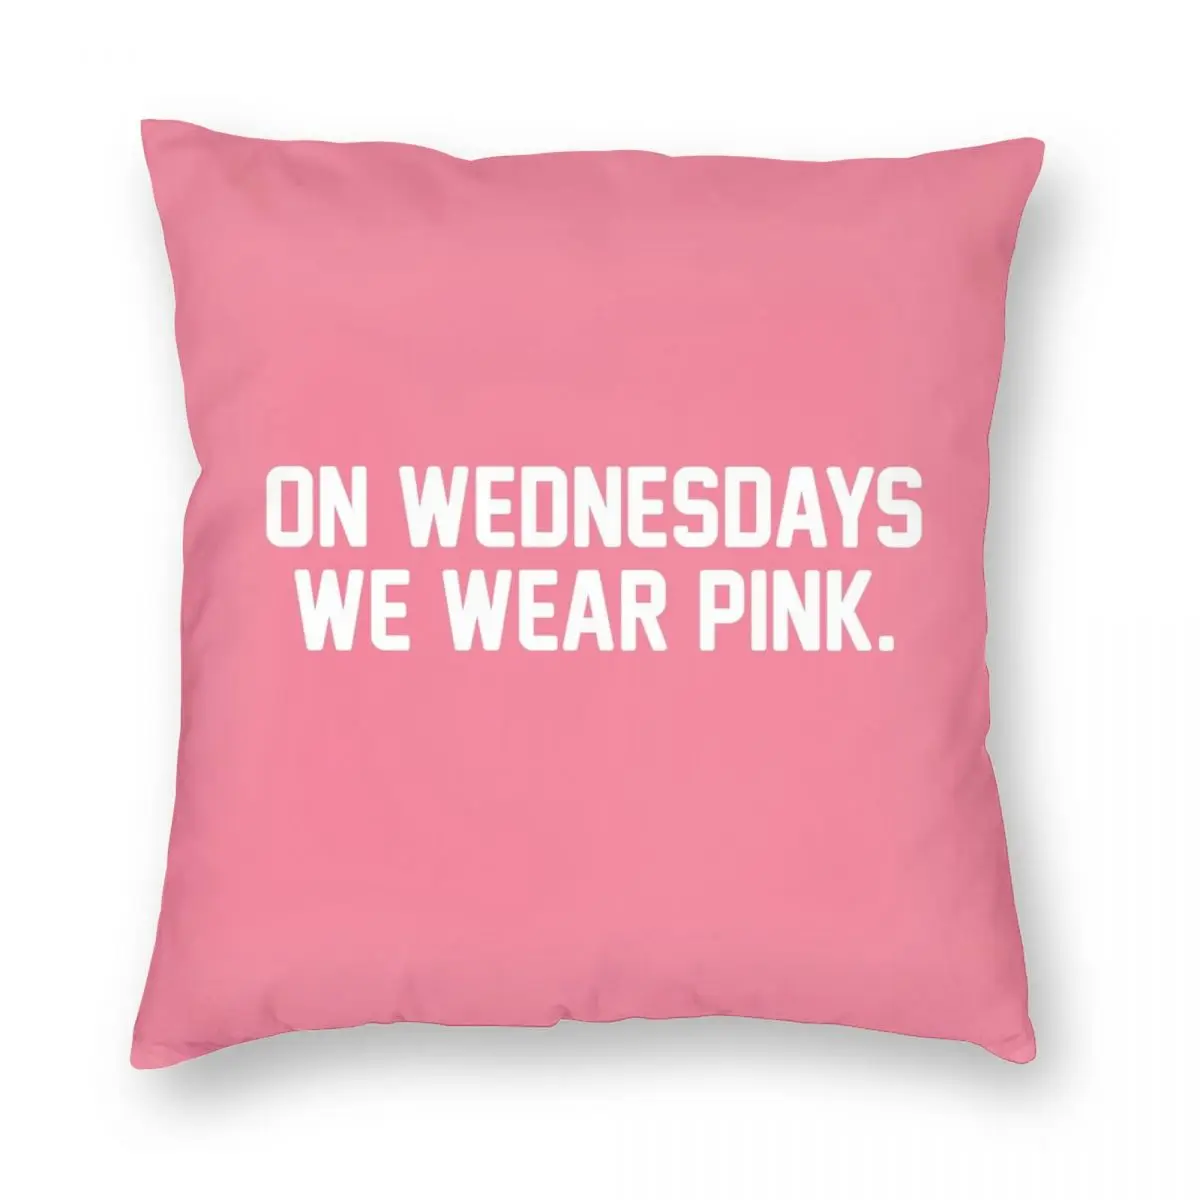 

On Wednesdays We Wear Pink Square Pillowcase Polyester Linen Velvet Zip Decor Throw Pillow Case Home Cushion Cover 45x45